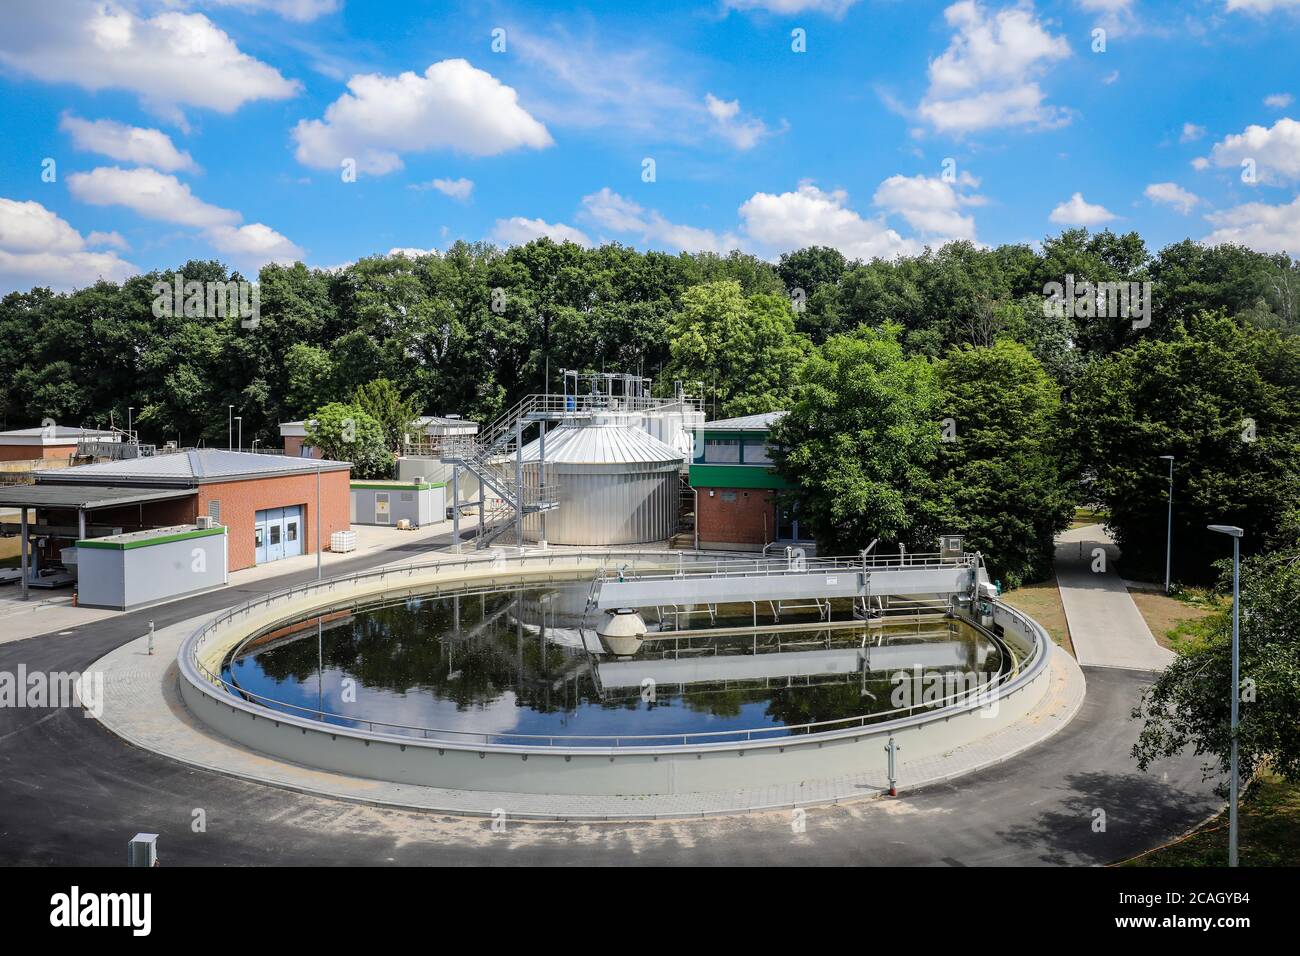 12.06.2020, Voerde, North Rhine-Westphalia, Germany - Wastewater treatment in the modernised Voerde wastewater treatment plant. 00X200612D024CAROEX.JP Stock Photo